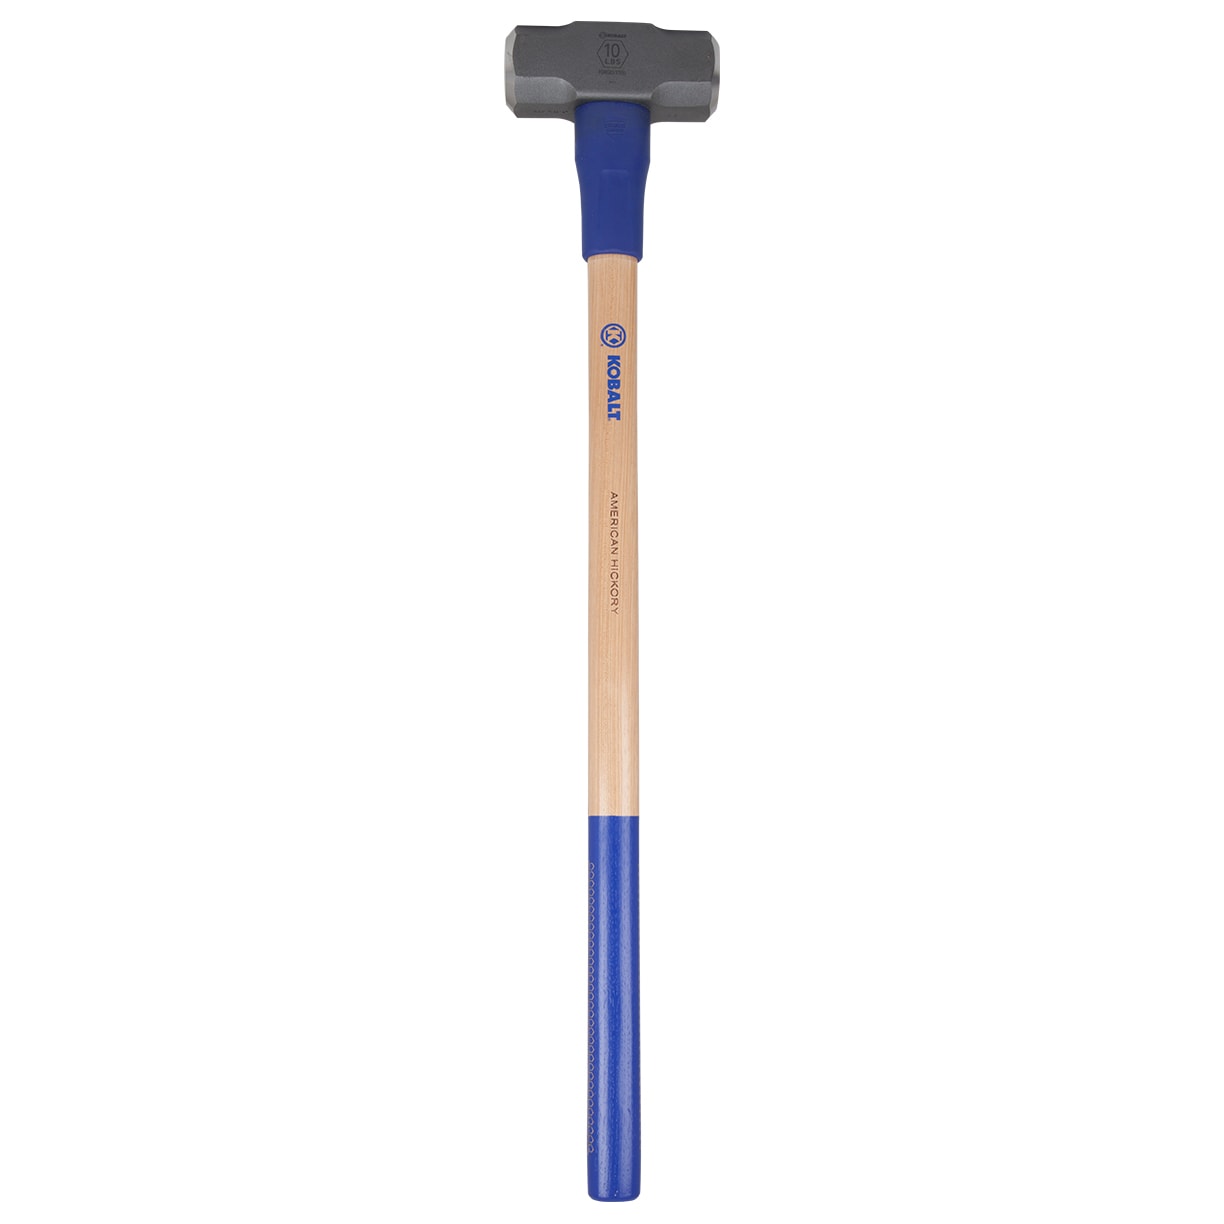 Steel Head Wood Sledge Hammer, 6 Letters Wooden Hammer